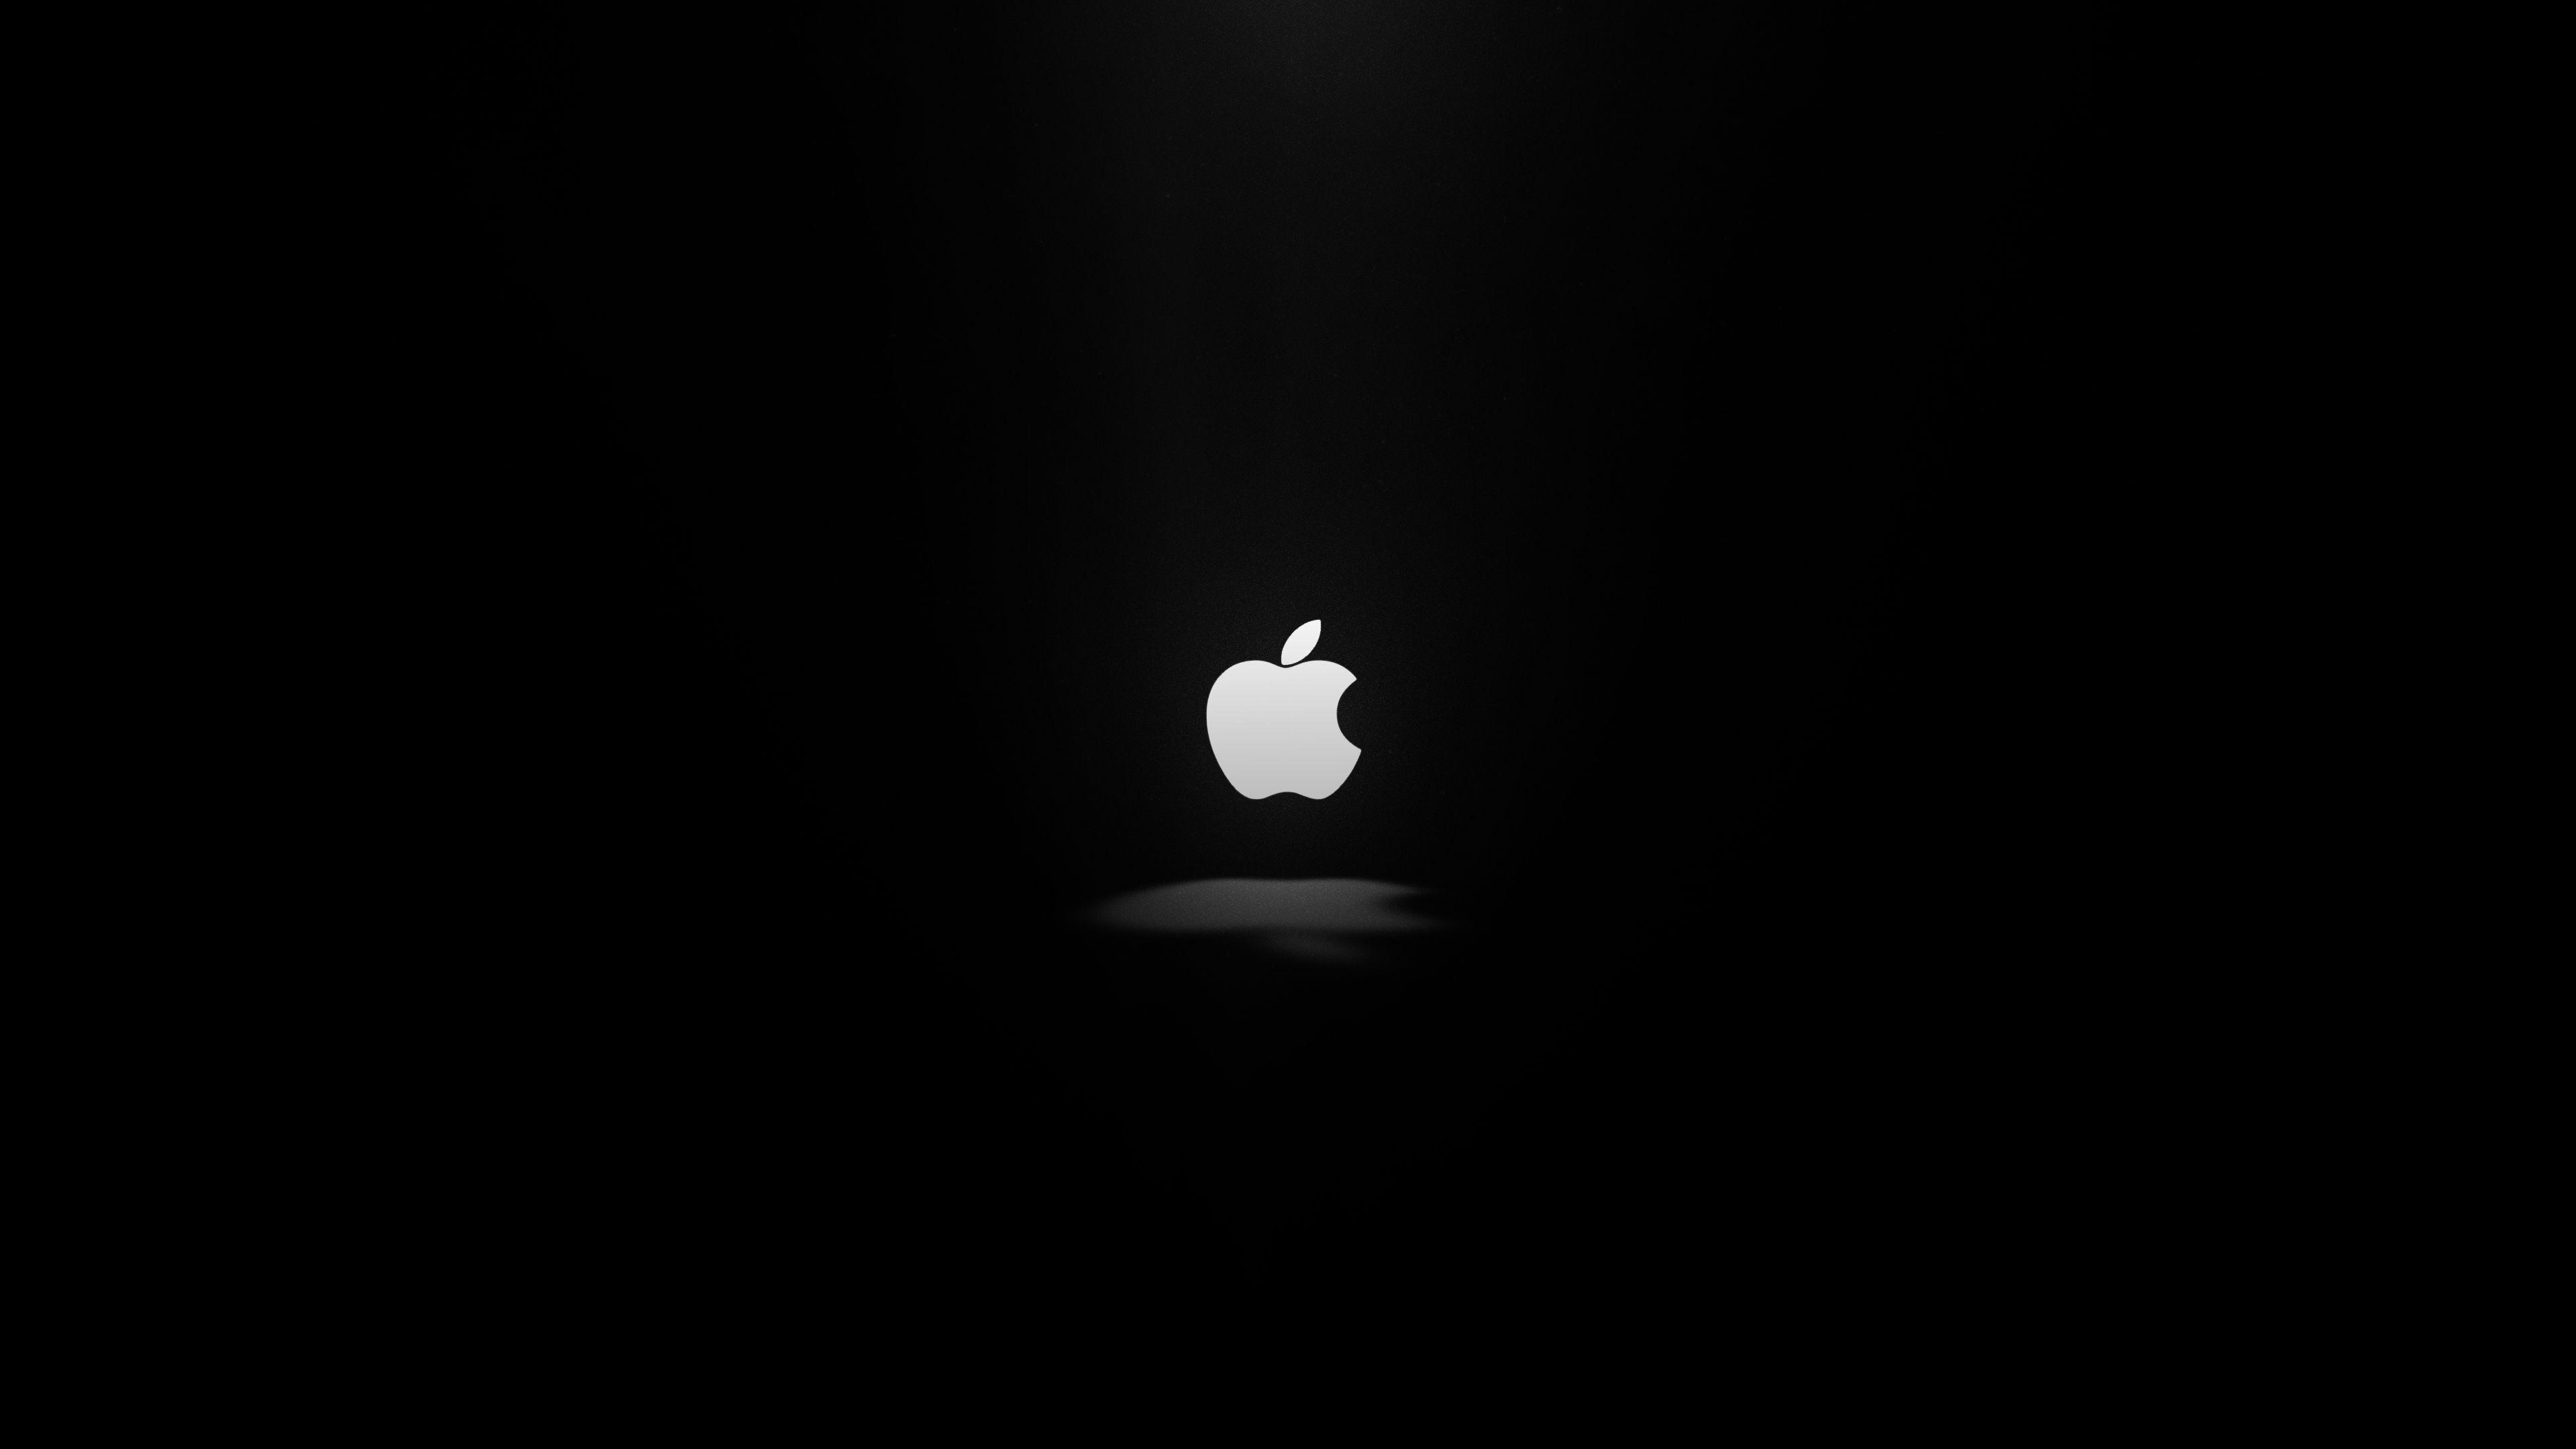 4K-resolution Black and White Logo - Wallpaper Apple, Dark, Logo, 4K, Minimal